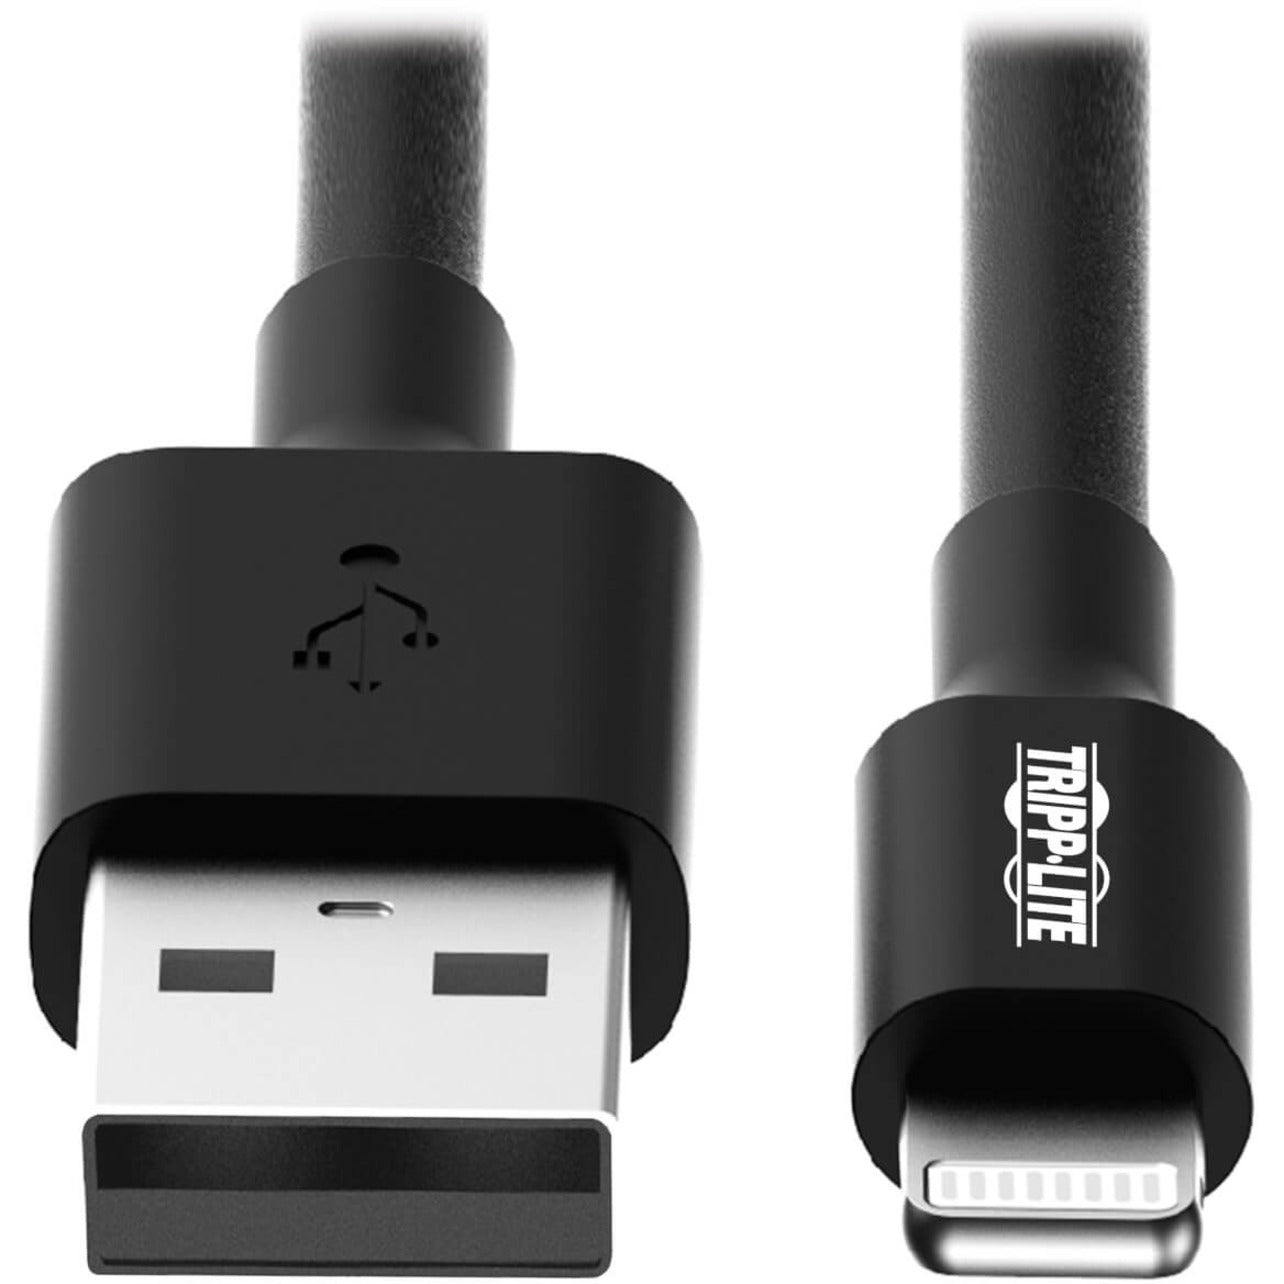 Tripp Lite M100-006-BK 6ft (1.8M) Schwarzes USB Sync / Ladekabel mit Lightning-Anschluss Kompatibel mit iPhone iPad iPod MFI-zertifiziert